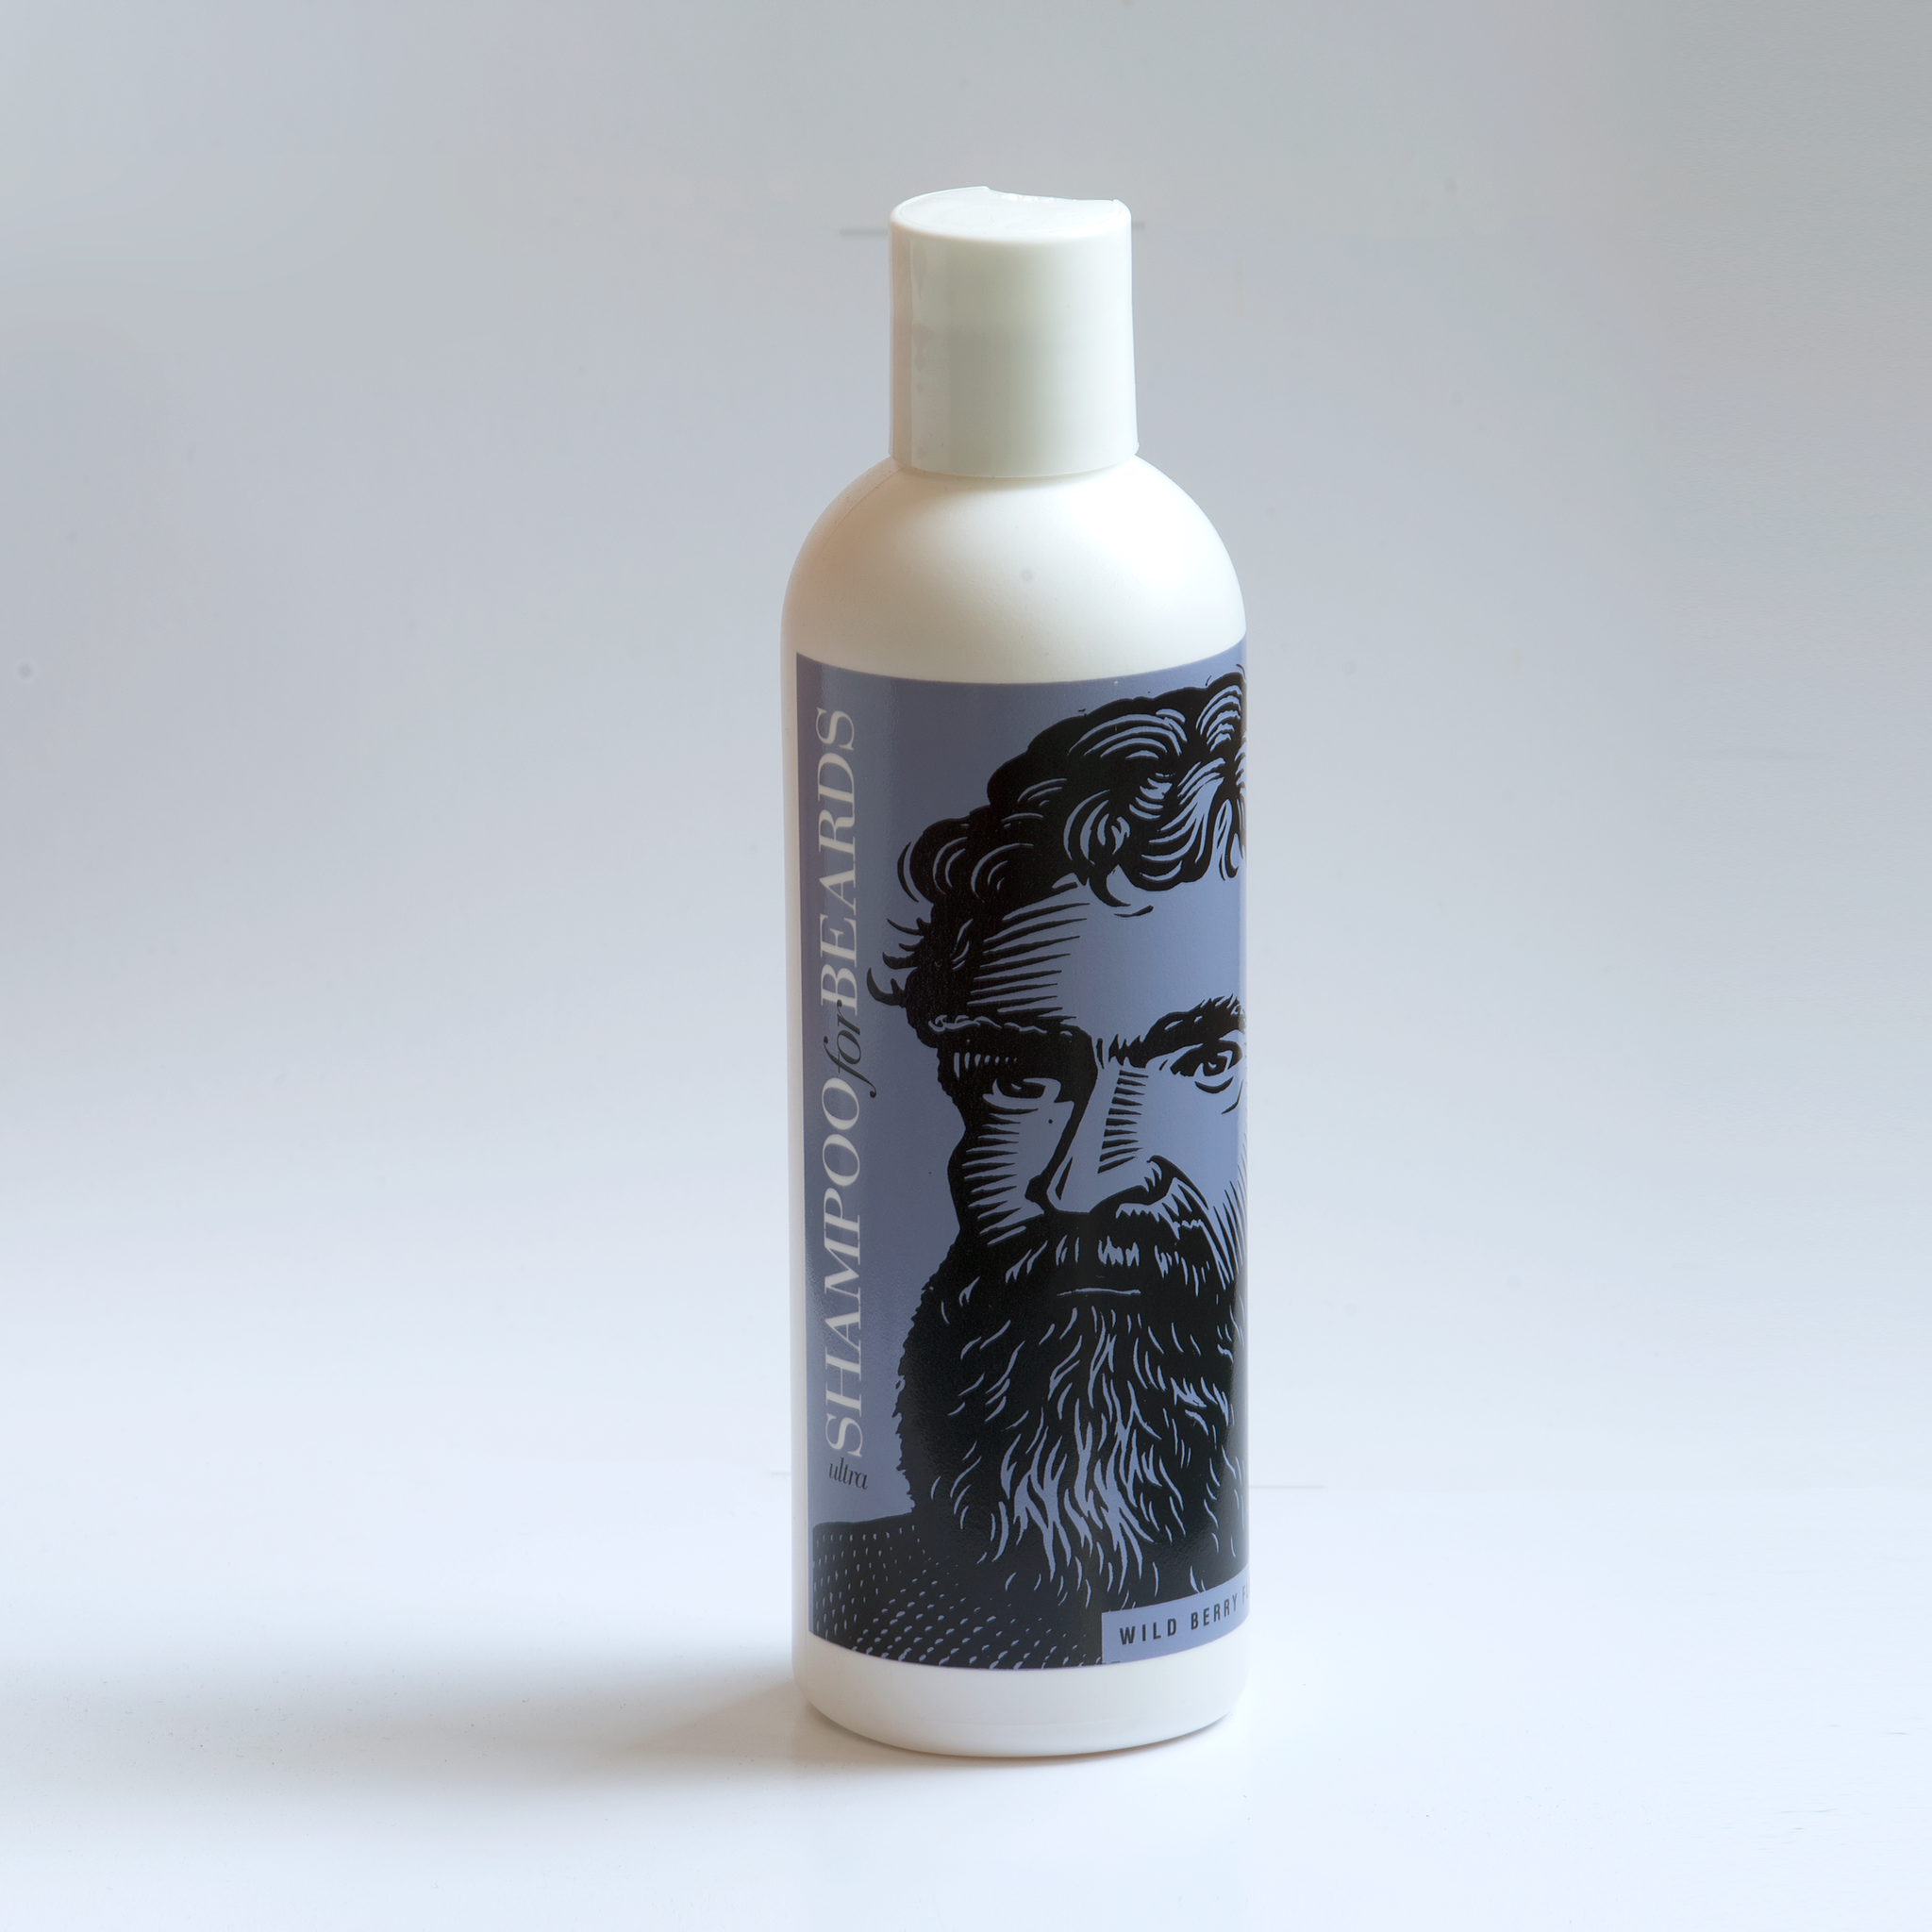 Beardsley Ultra Shampoo for Beards Wild Berry flavor